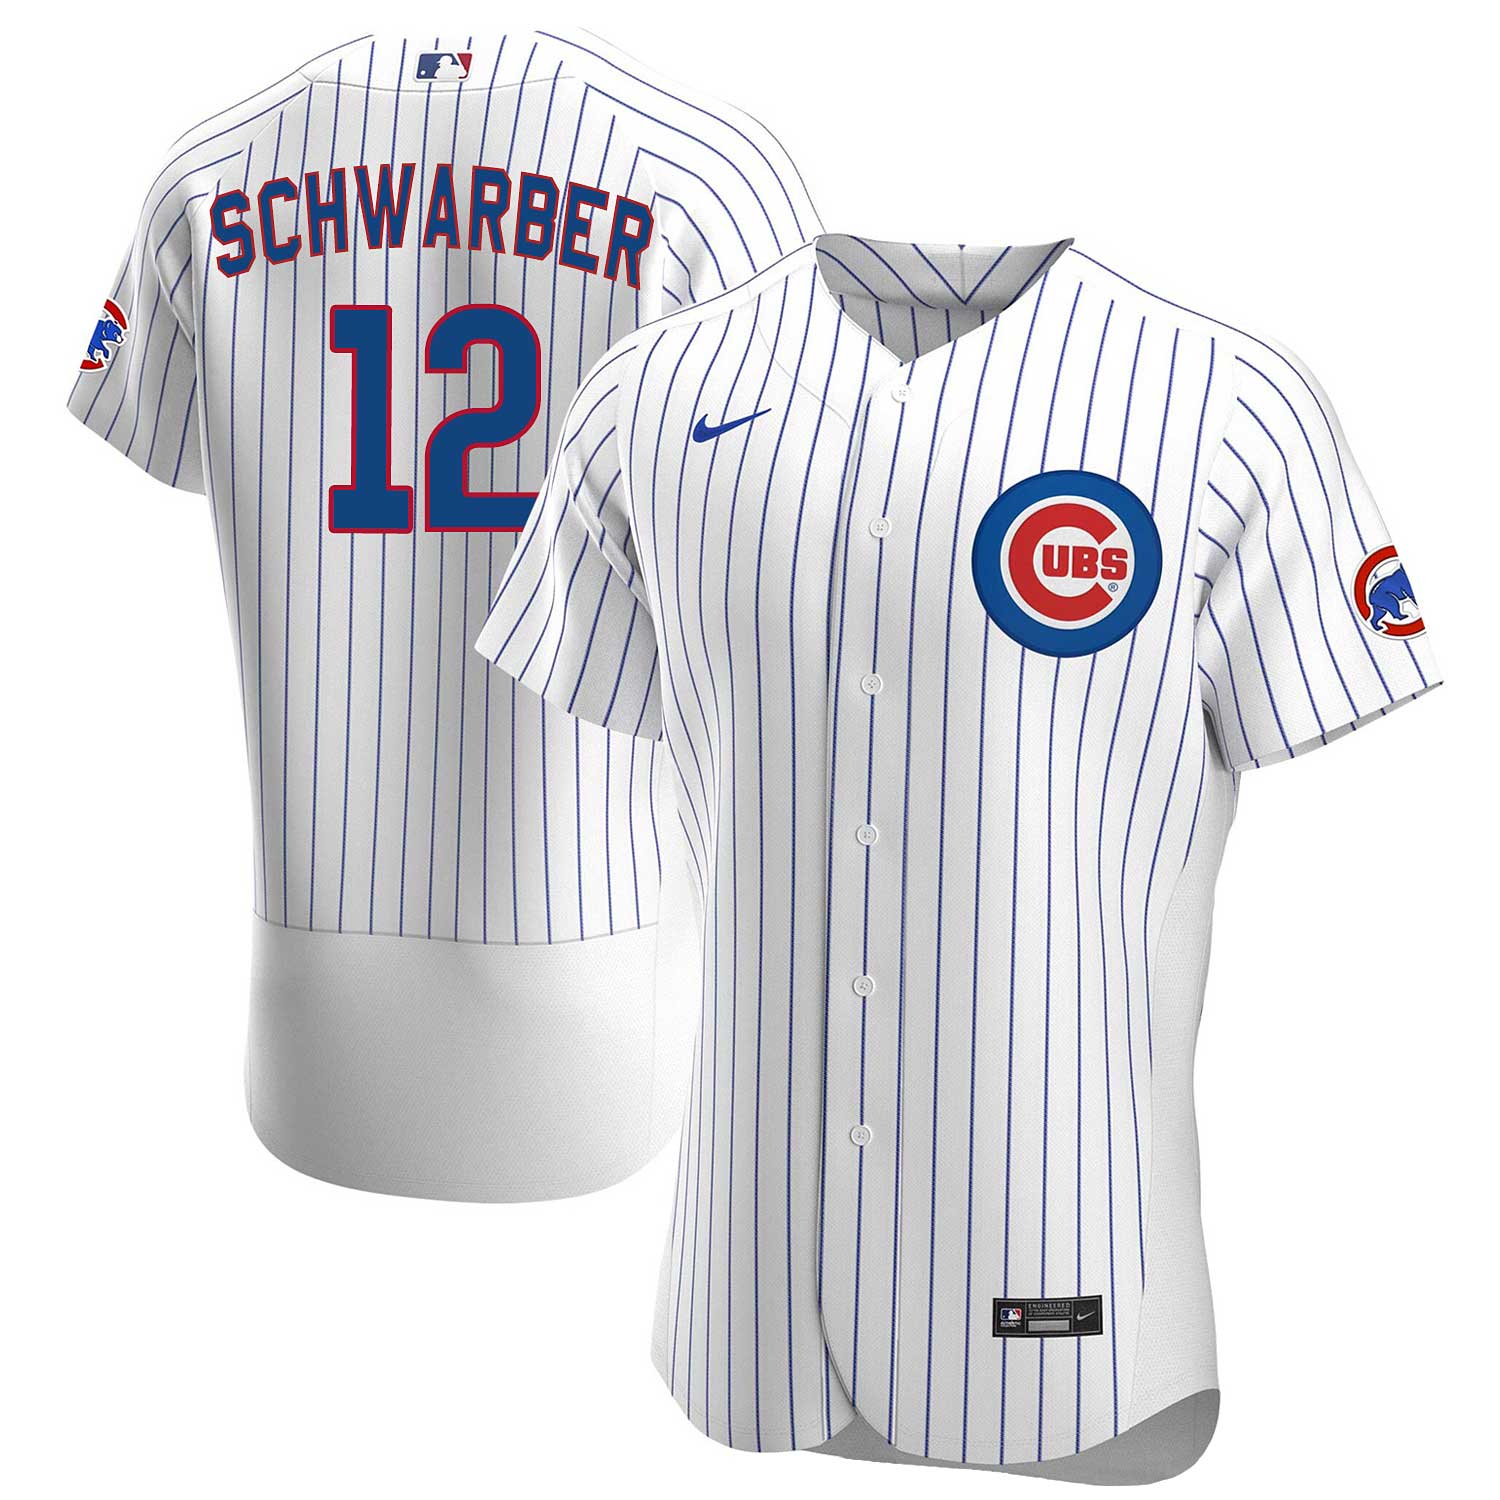 Kyle Schwarber Chicago Cubs Jersey Size XL 48 MLB